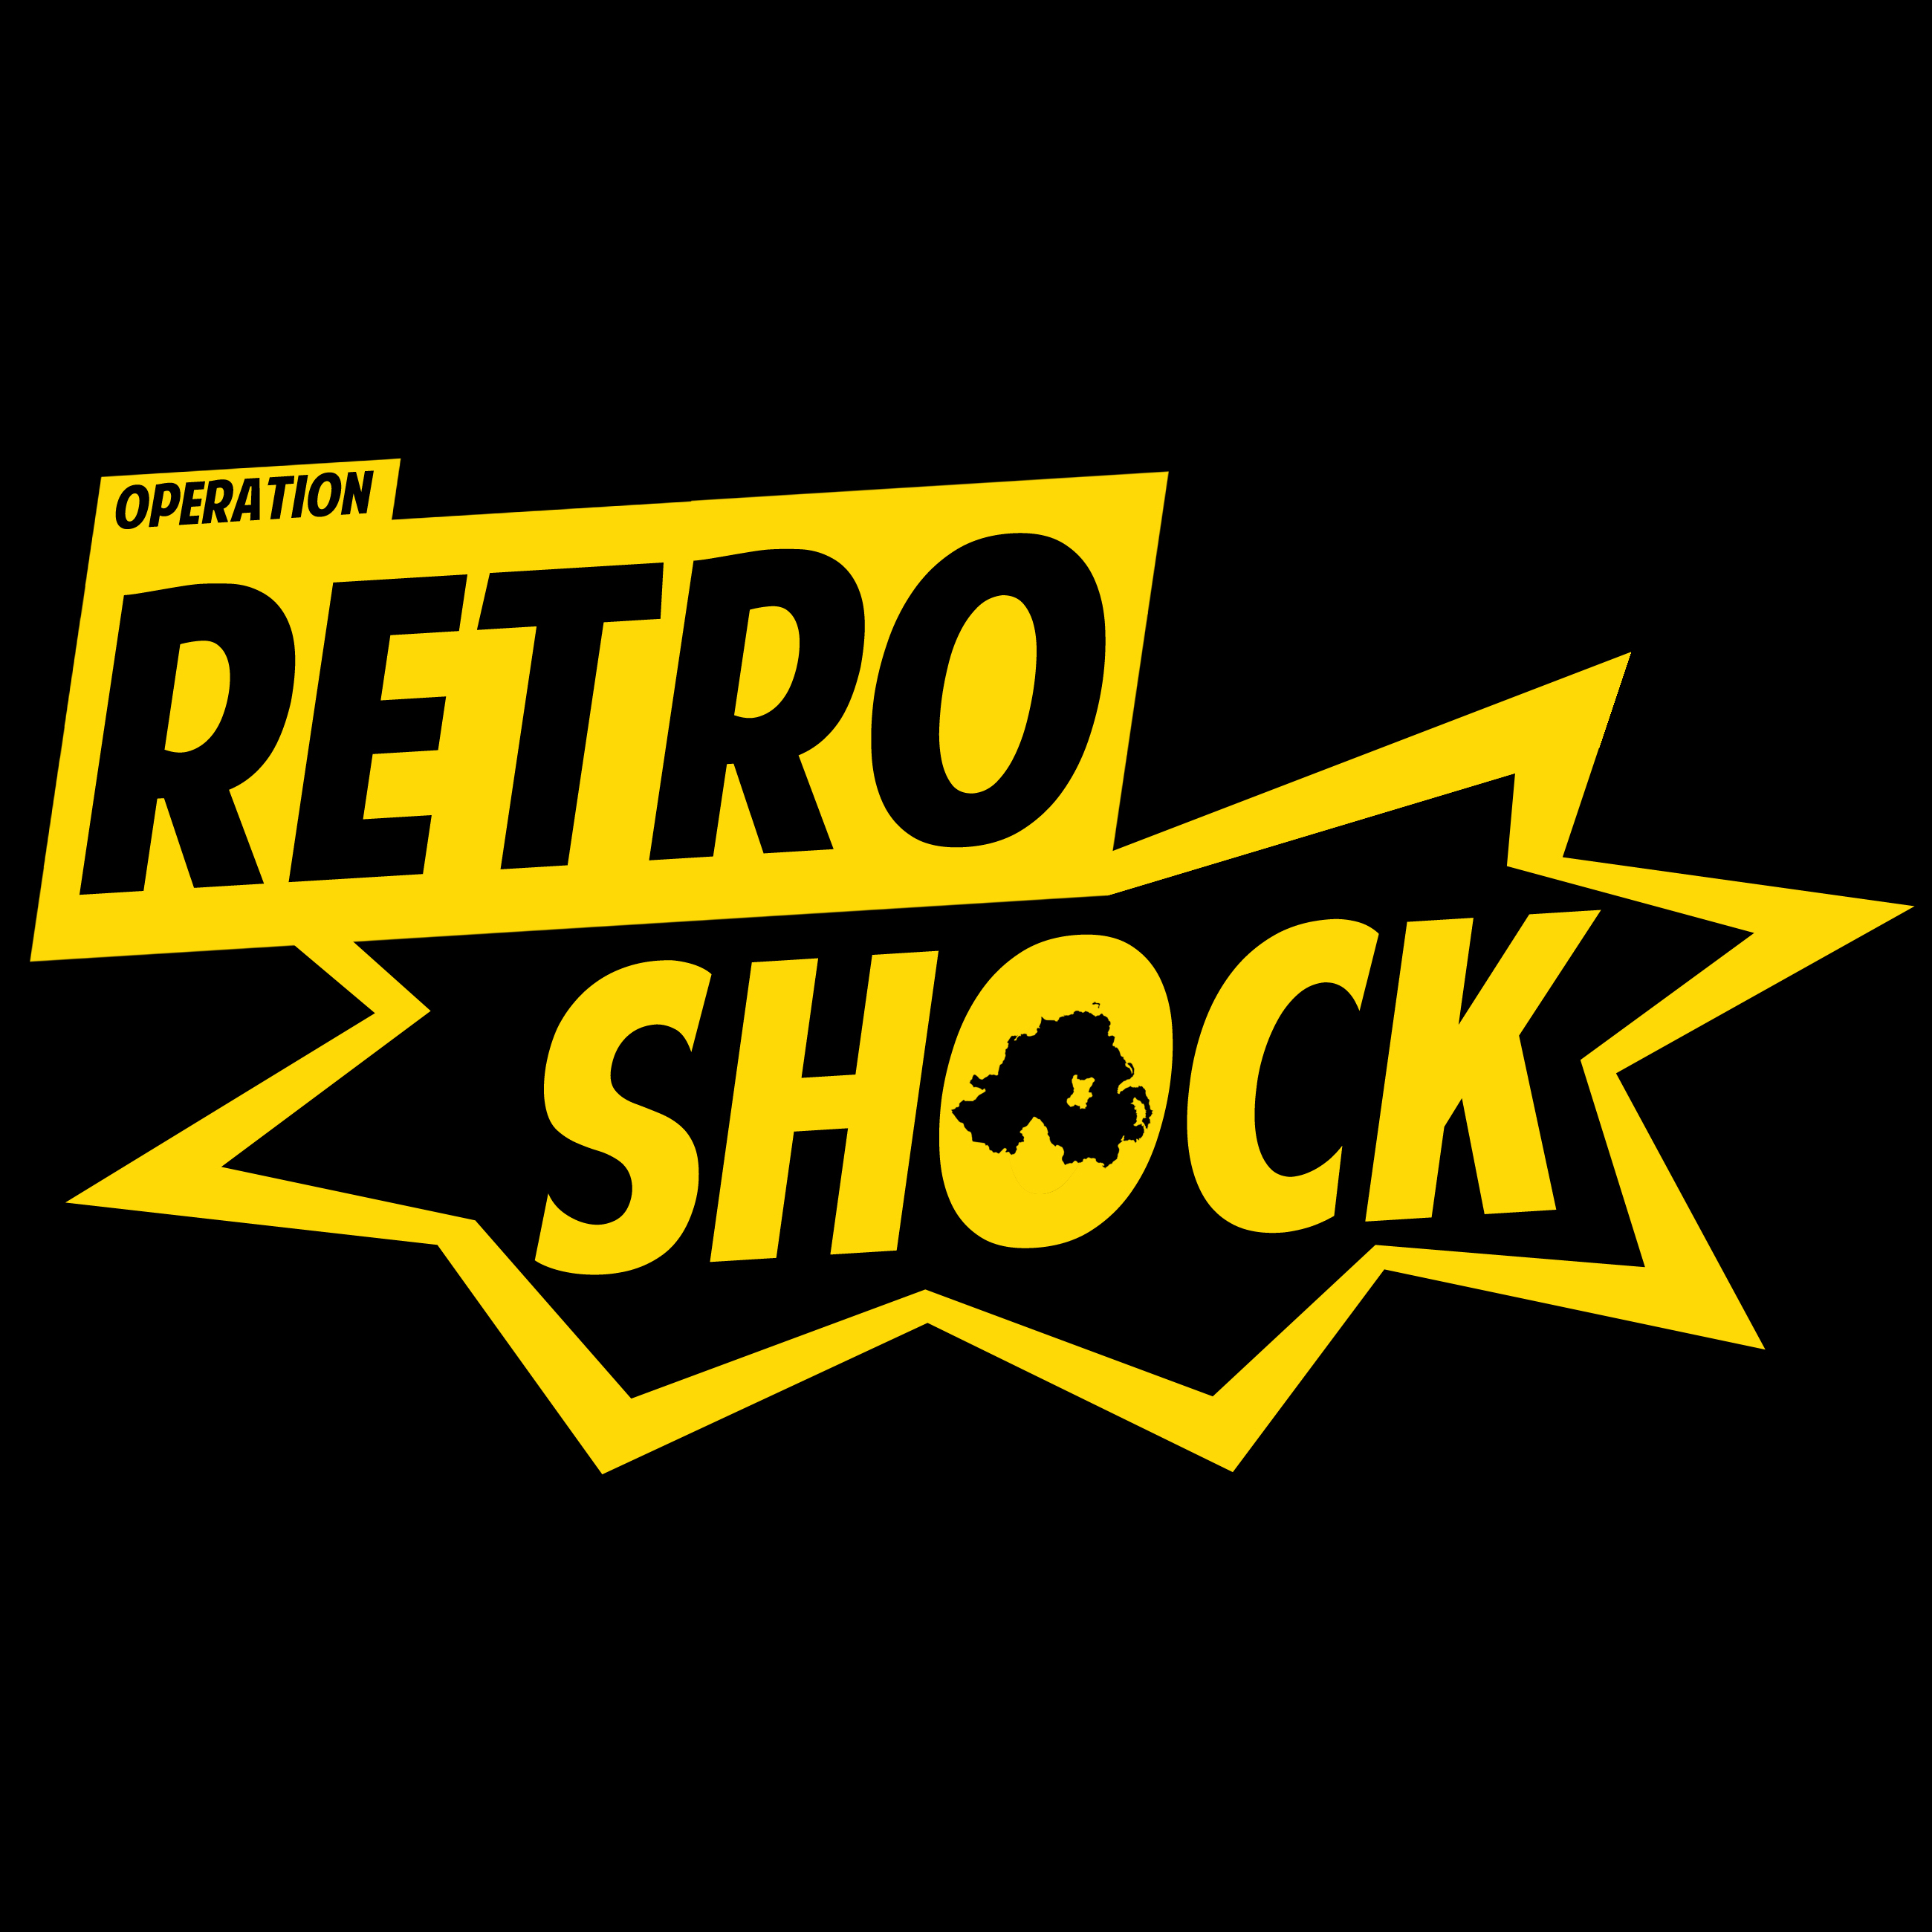 Operation Retroshock - Summer 2018 PSA #2 (Retroshock Returns on the 27th August) &amp; From The Vault)